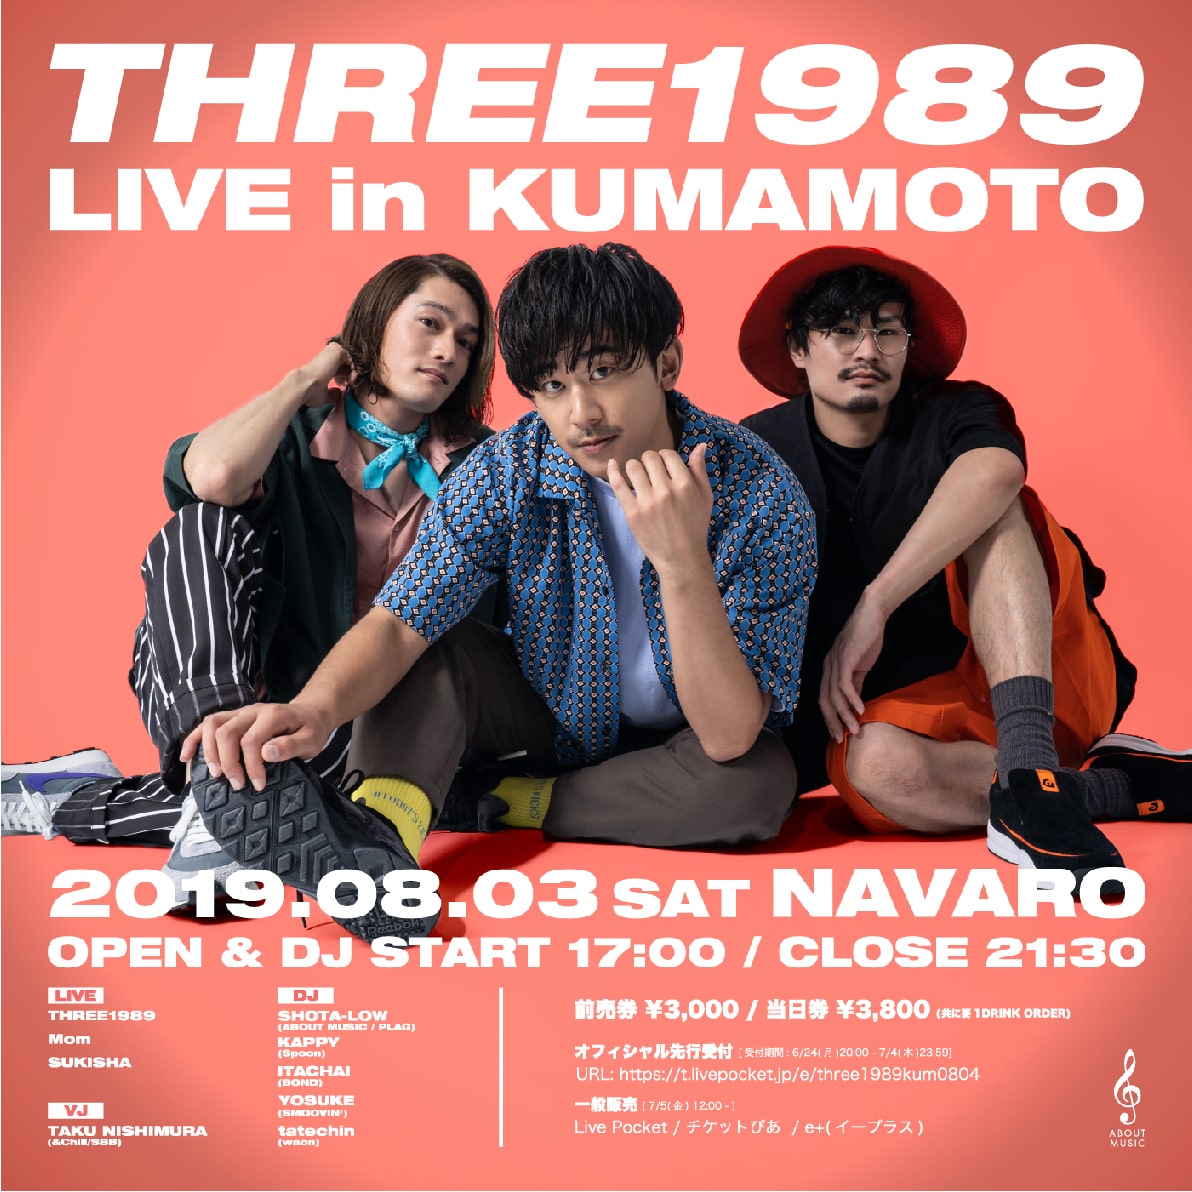 THREE1989 LIVE in KUMAMOTOチラシ1